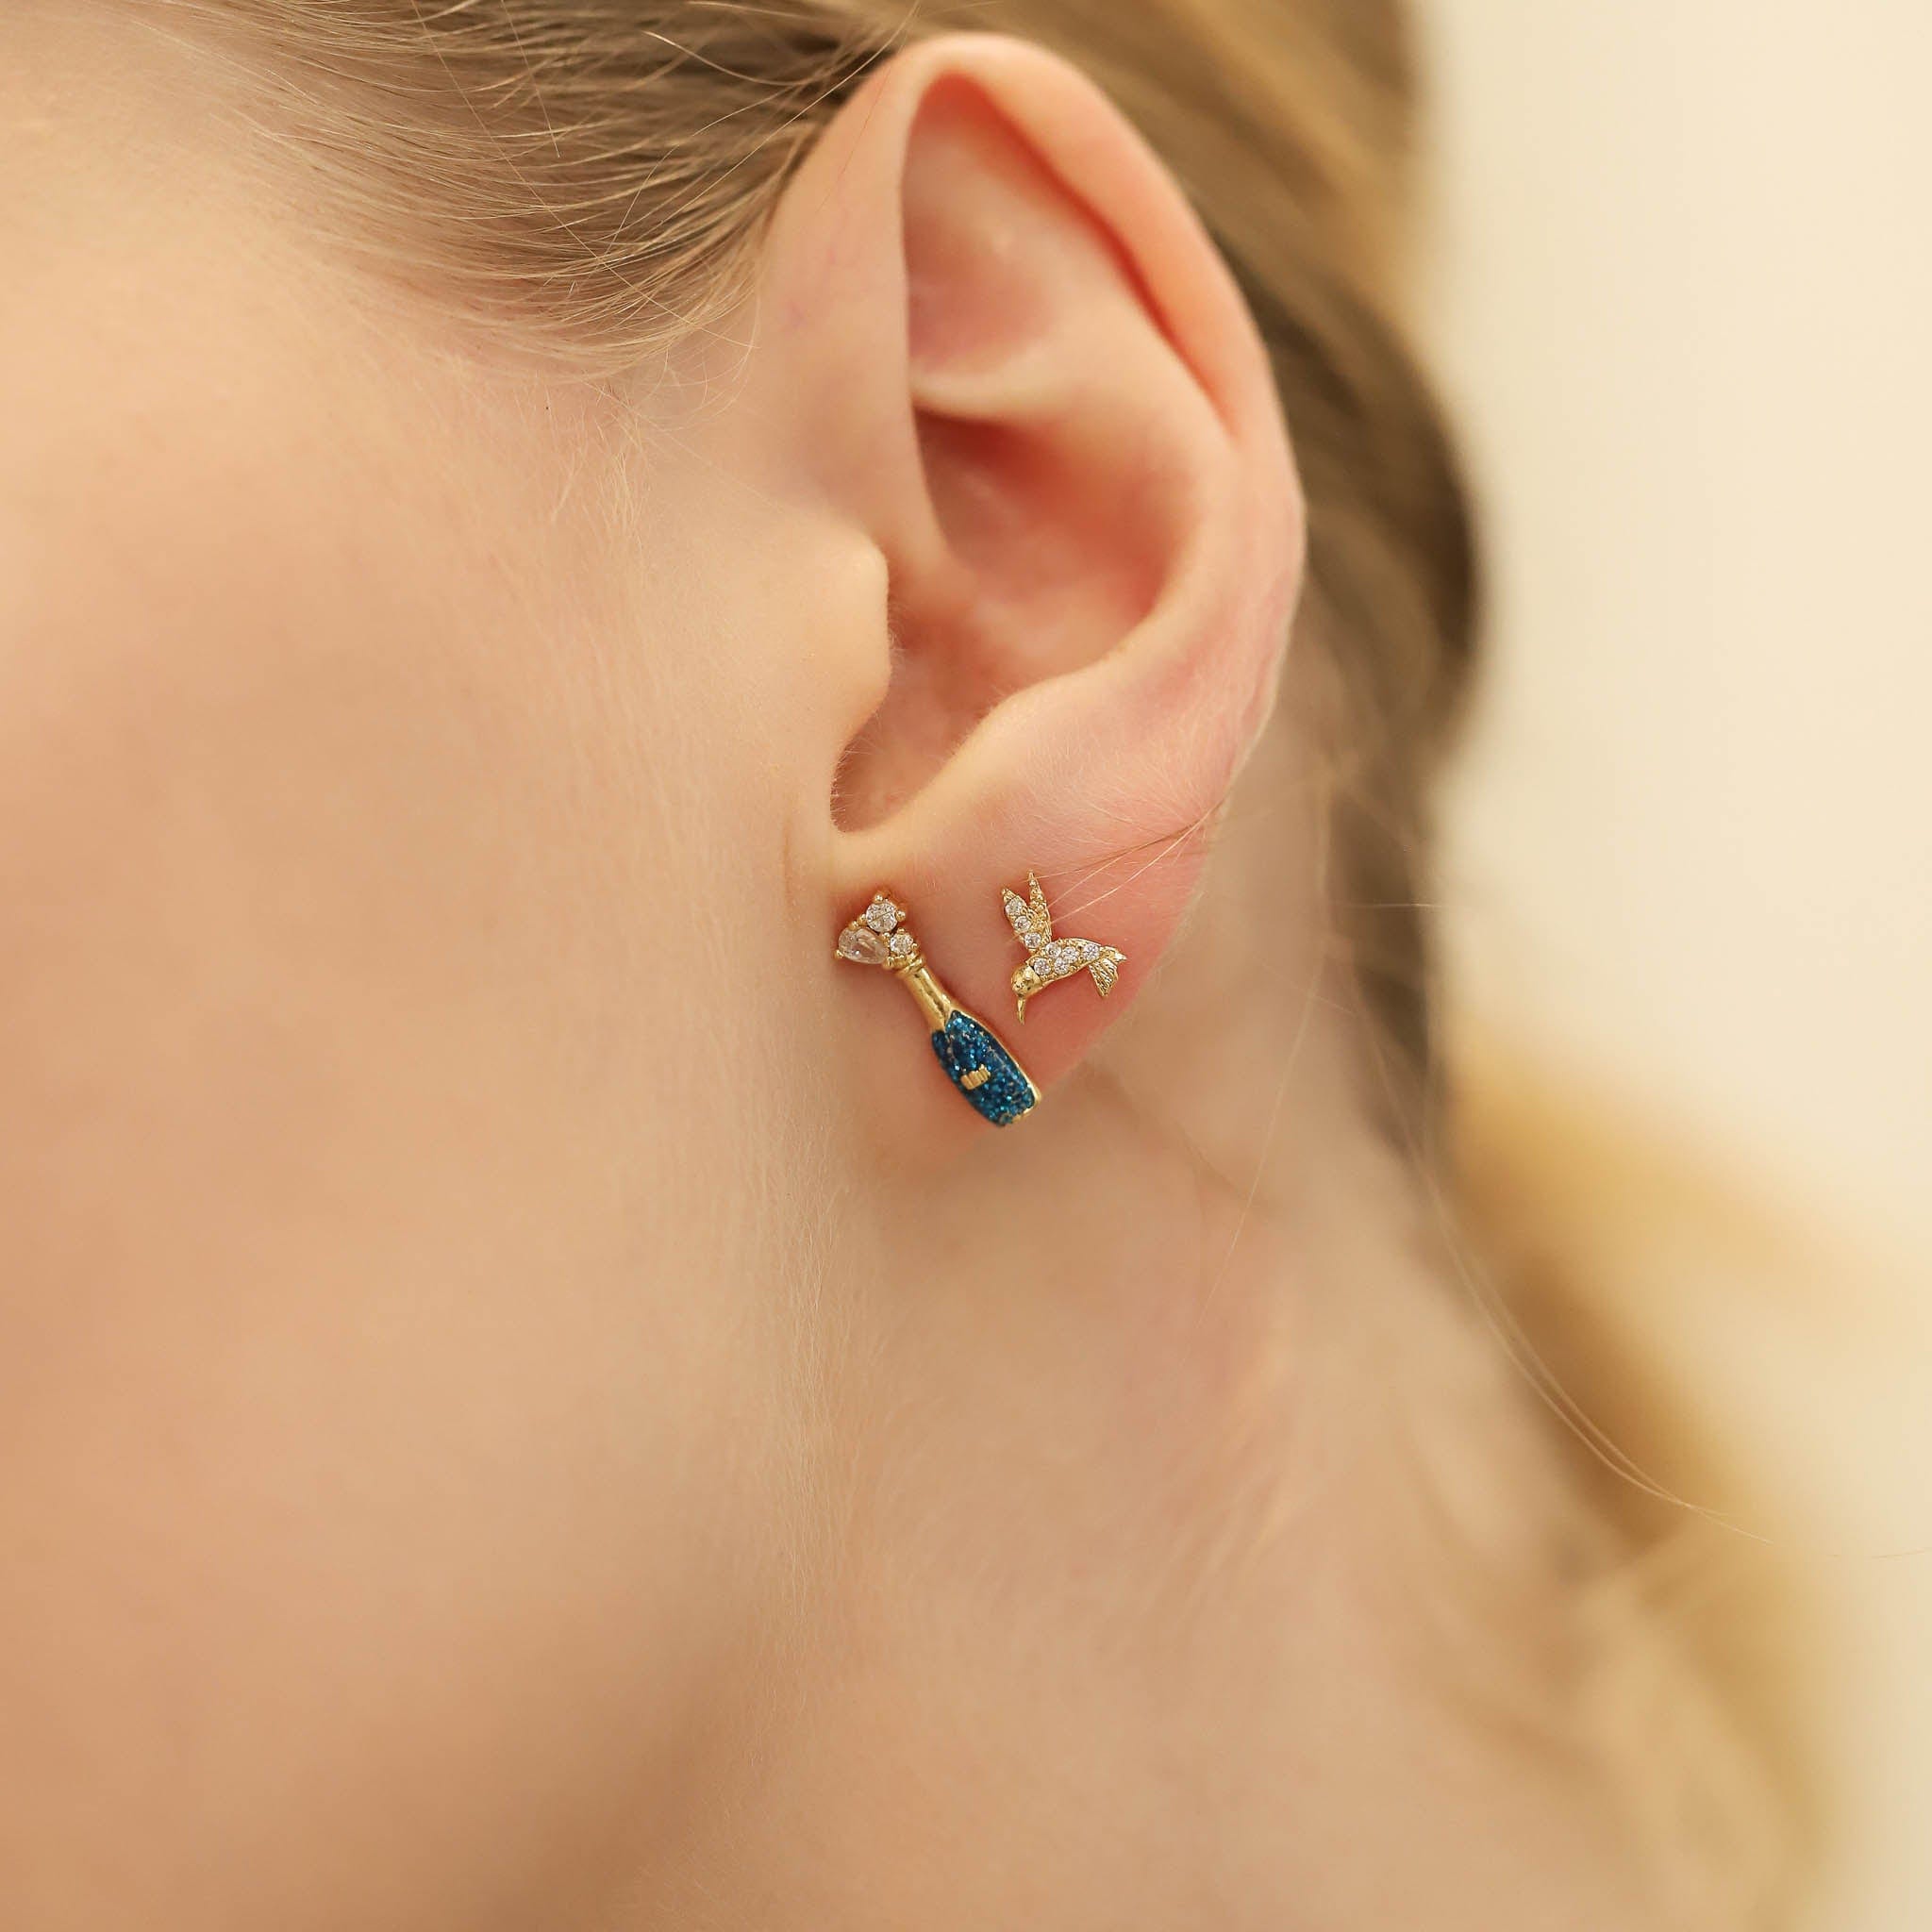 TAI JEWELRY Earrings Hummingbird Studs